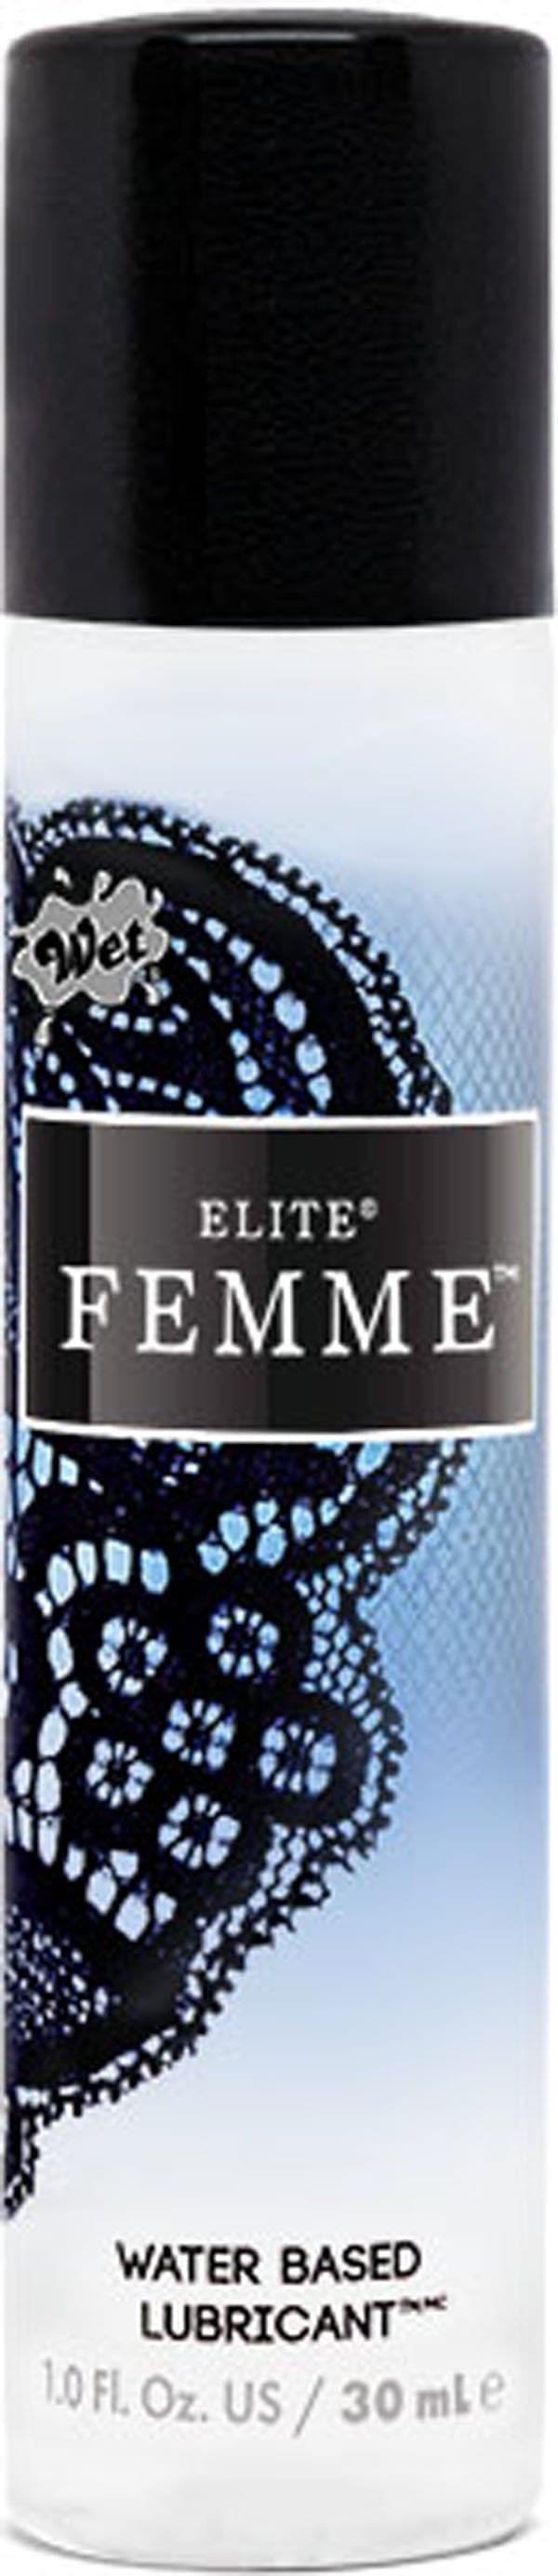 wet elite femme water based 1 fl oz